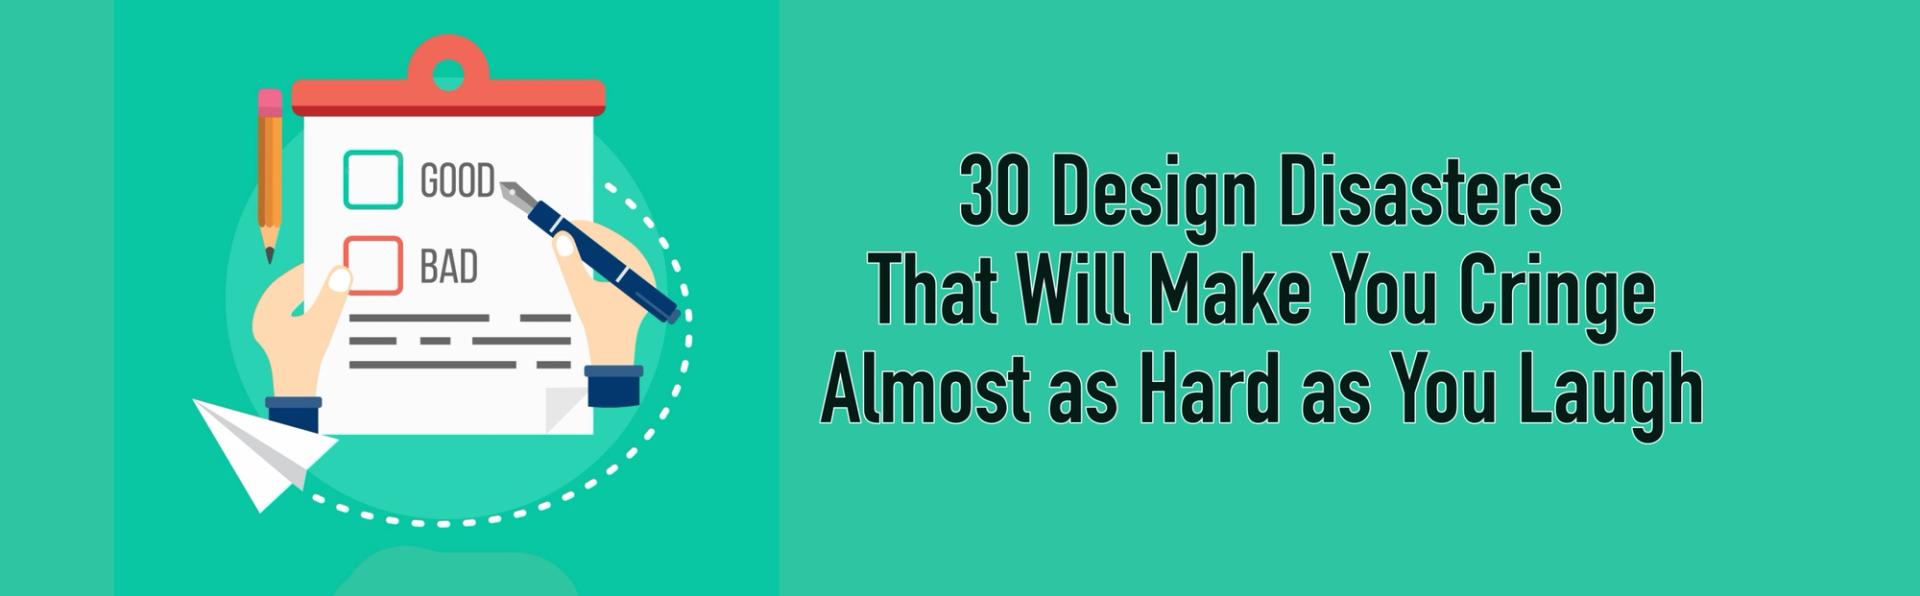 30 Design Disasters That Will Make You Cringe - Superside